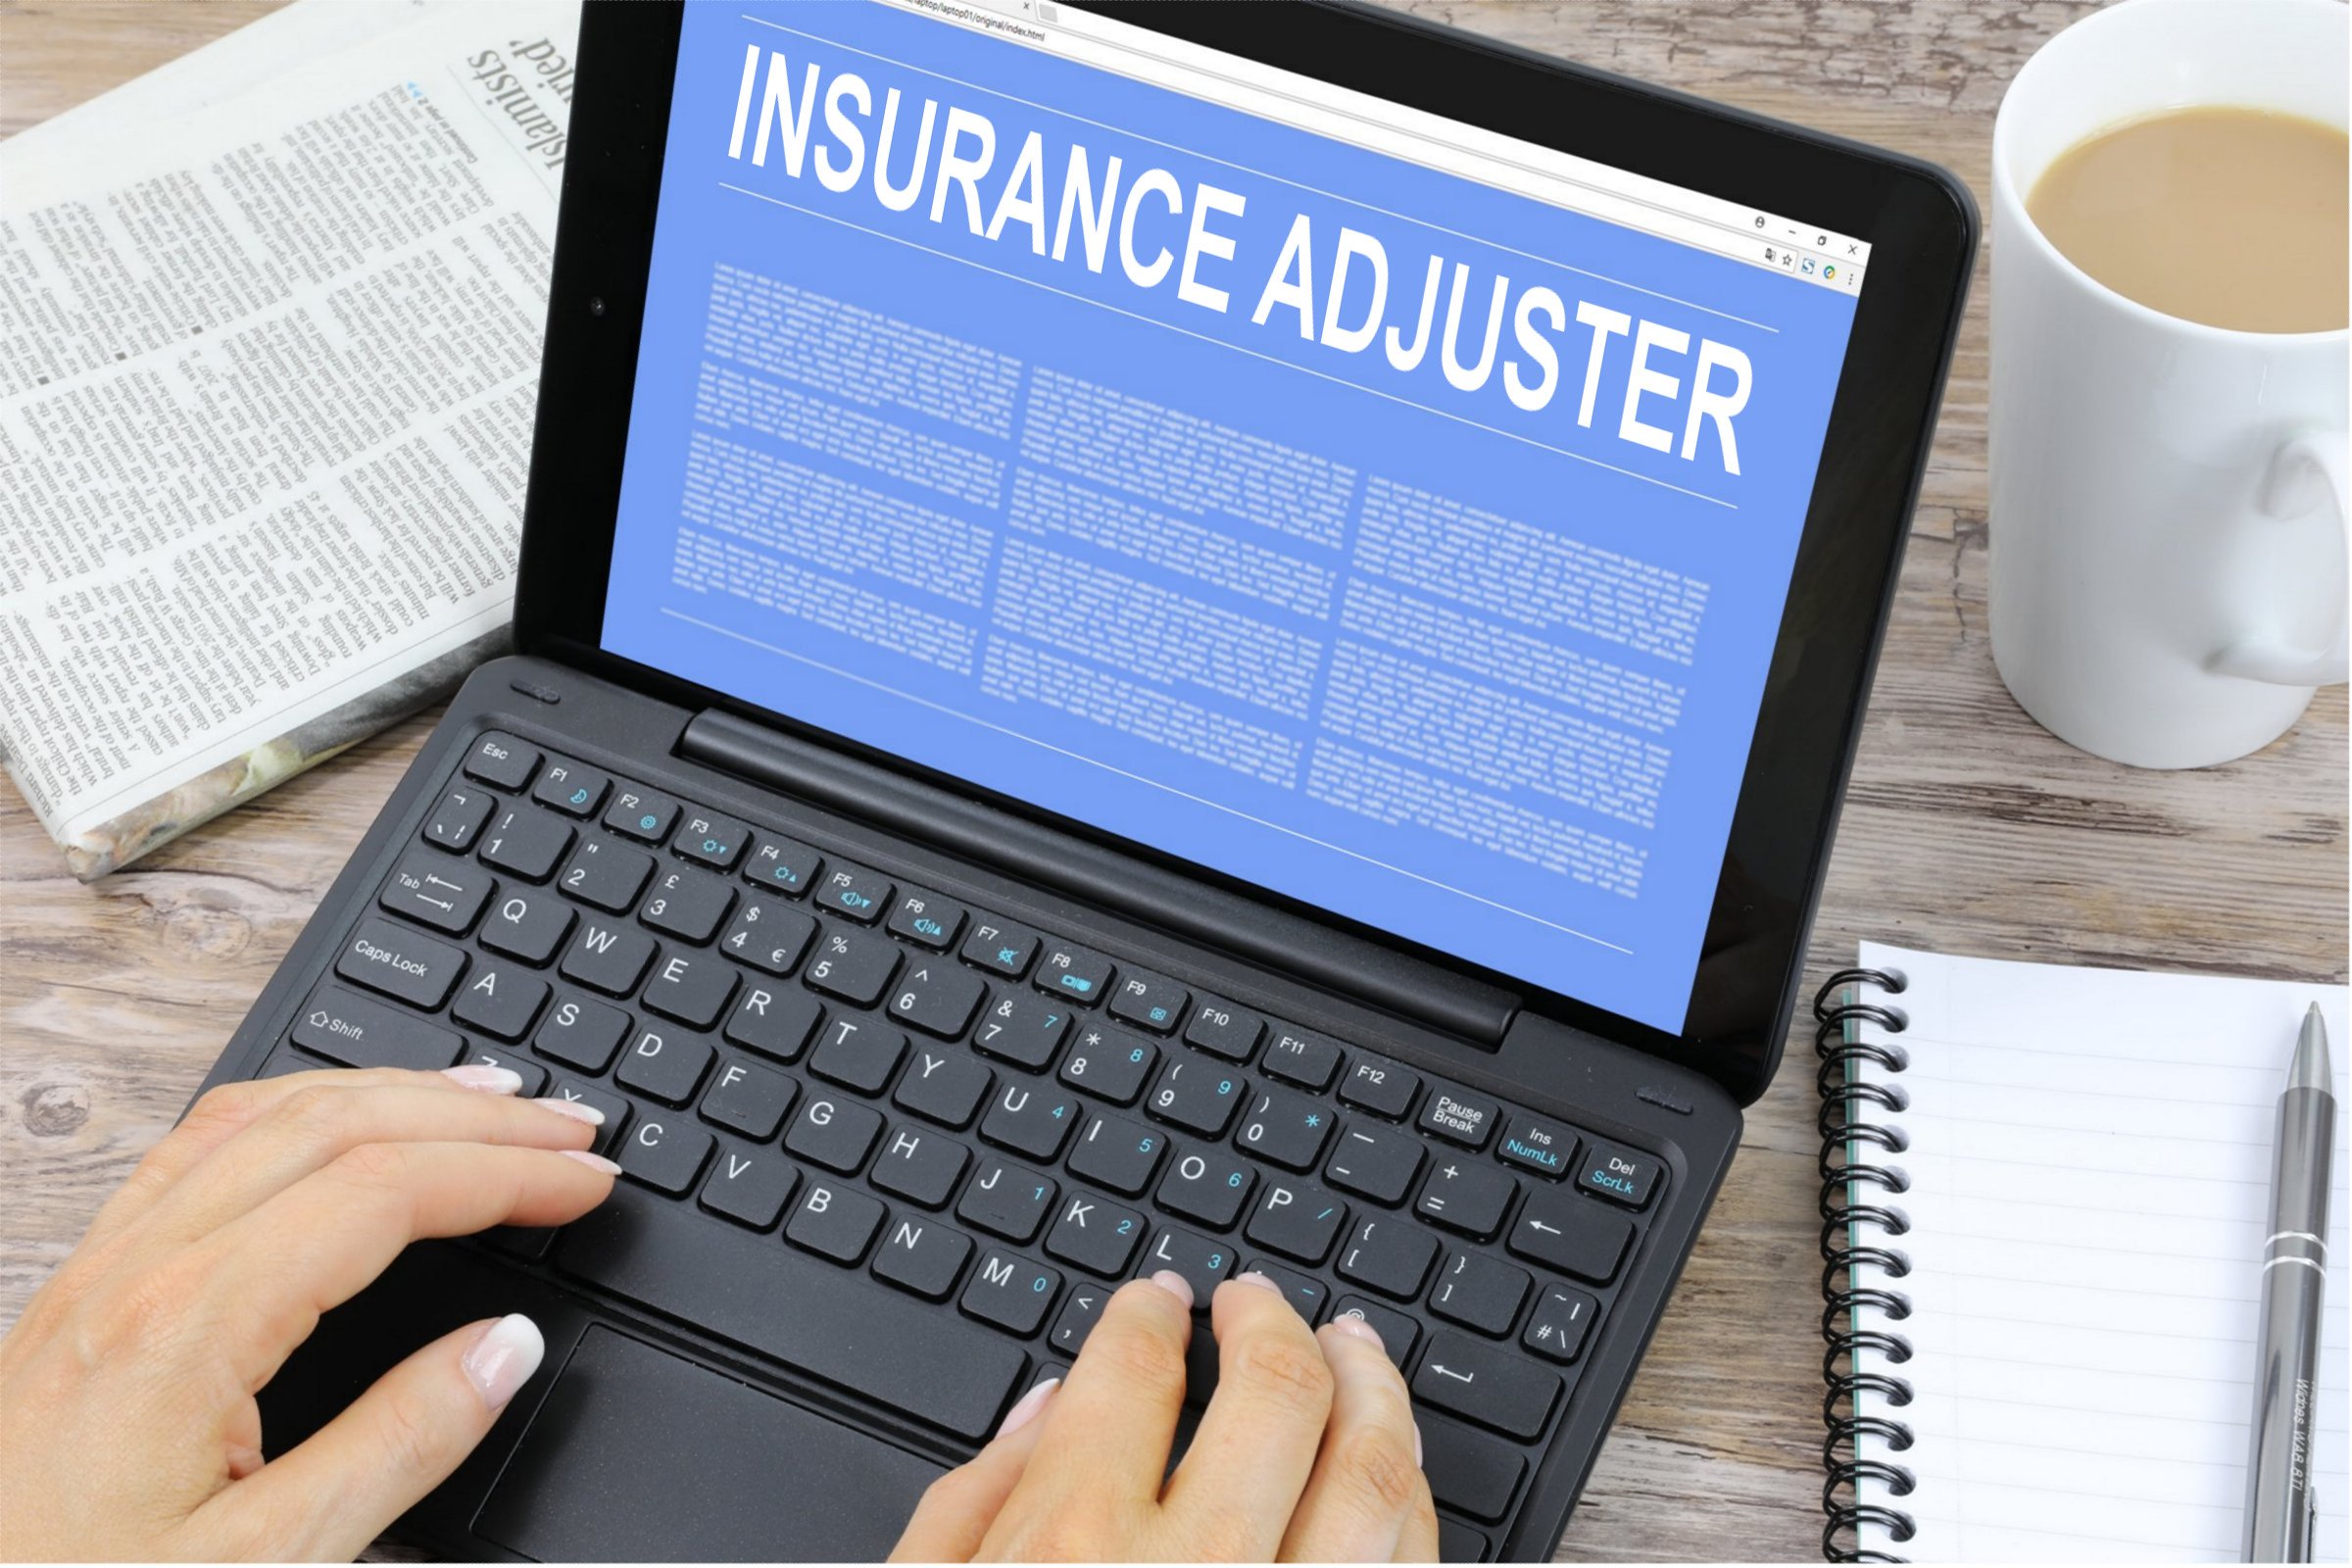 insurance adjuster